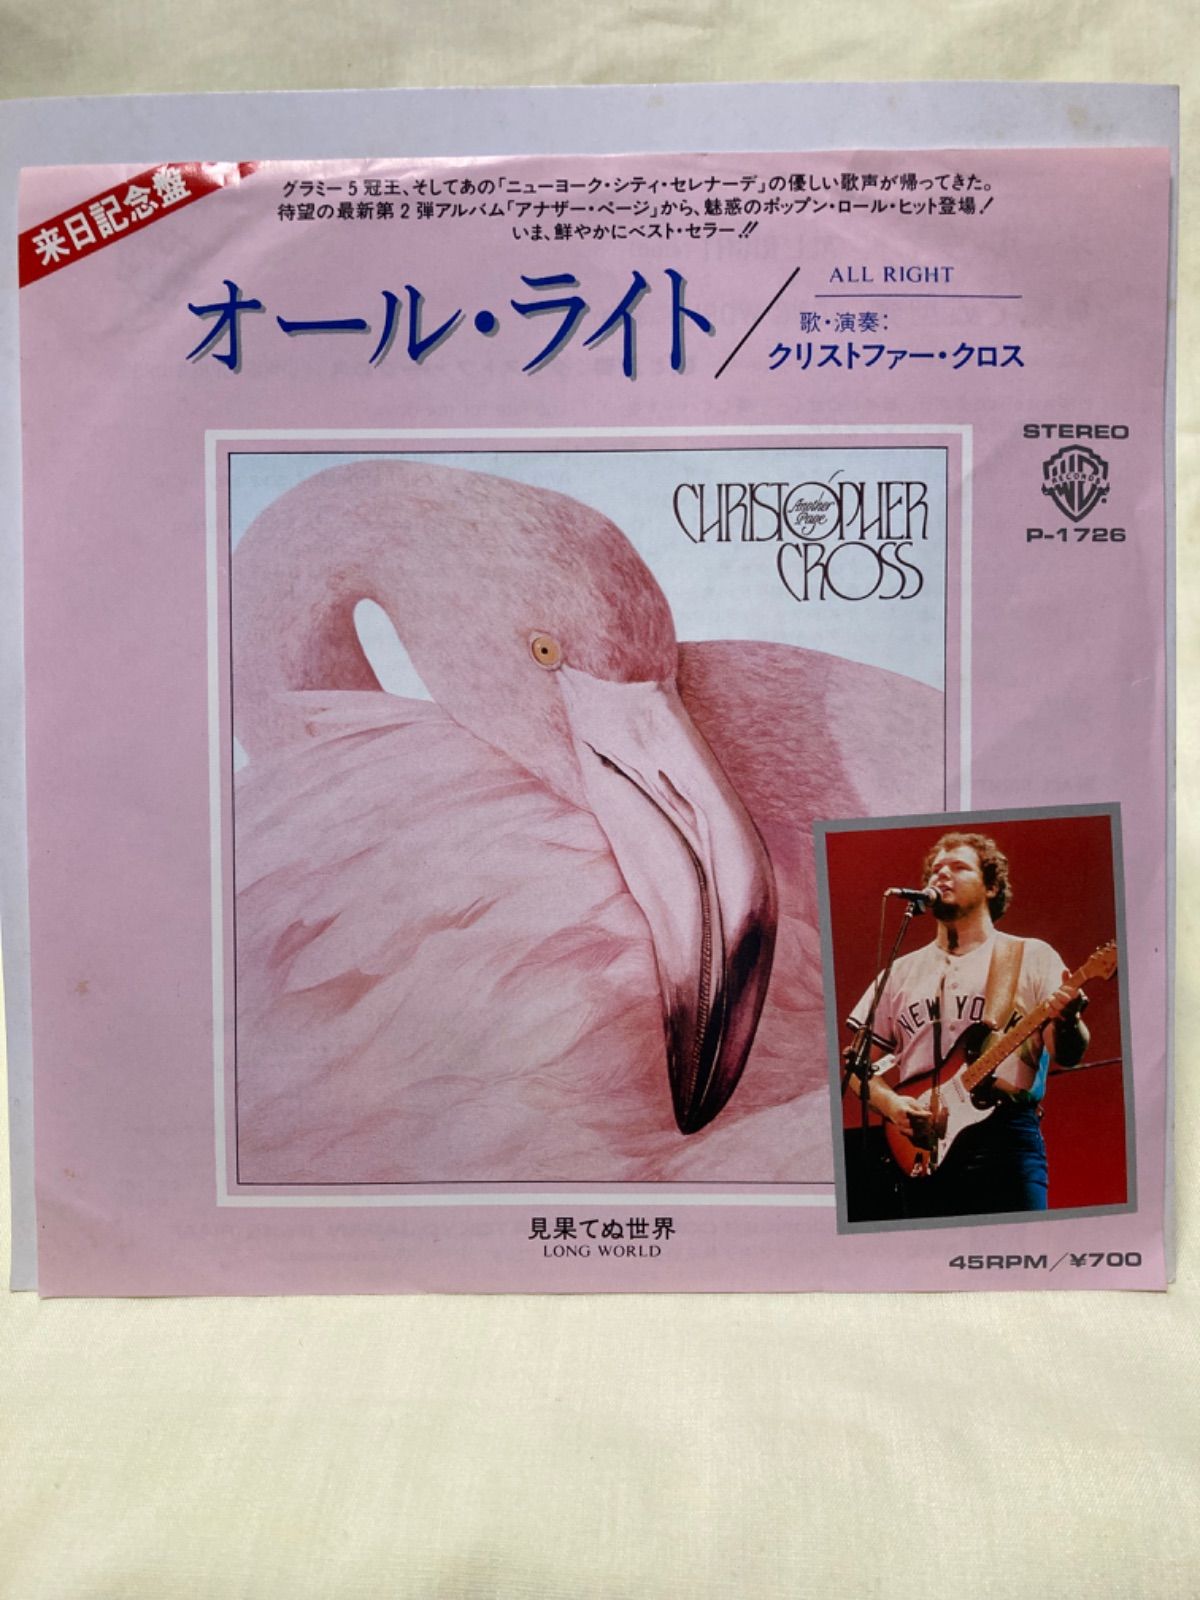 LP☆クリストファー・クロス / CHRISTOPHER CROSS / アナザー・ページ / ANOTHER PAGE / P-11286 -  レコード